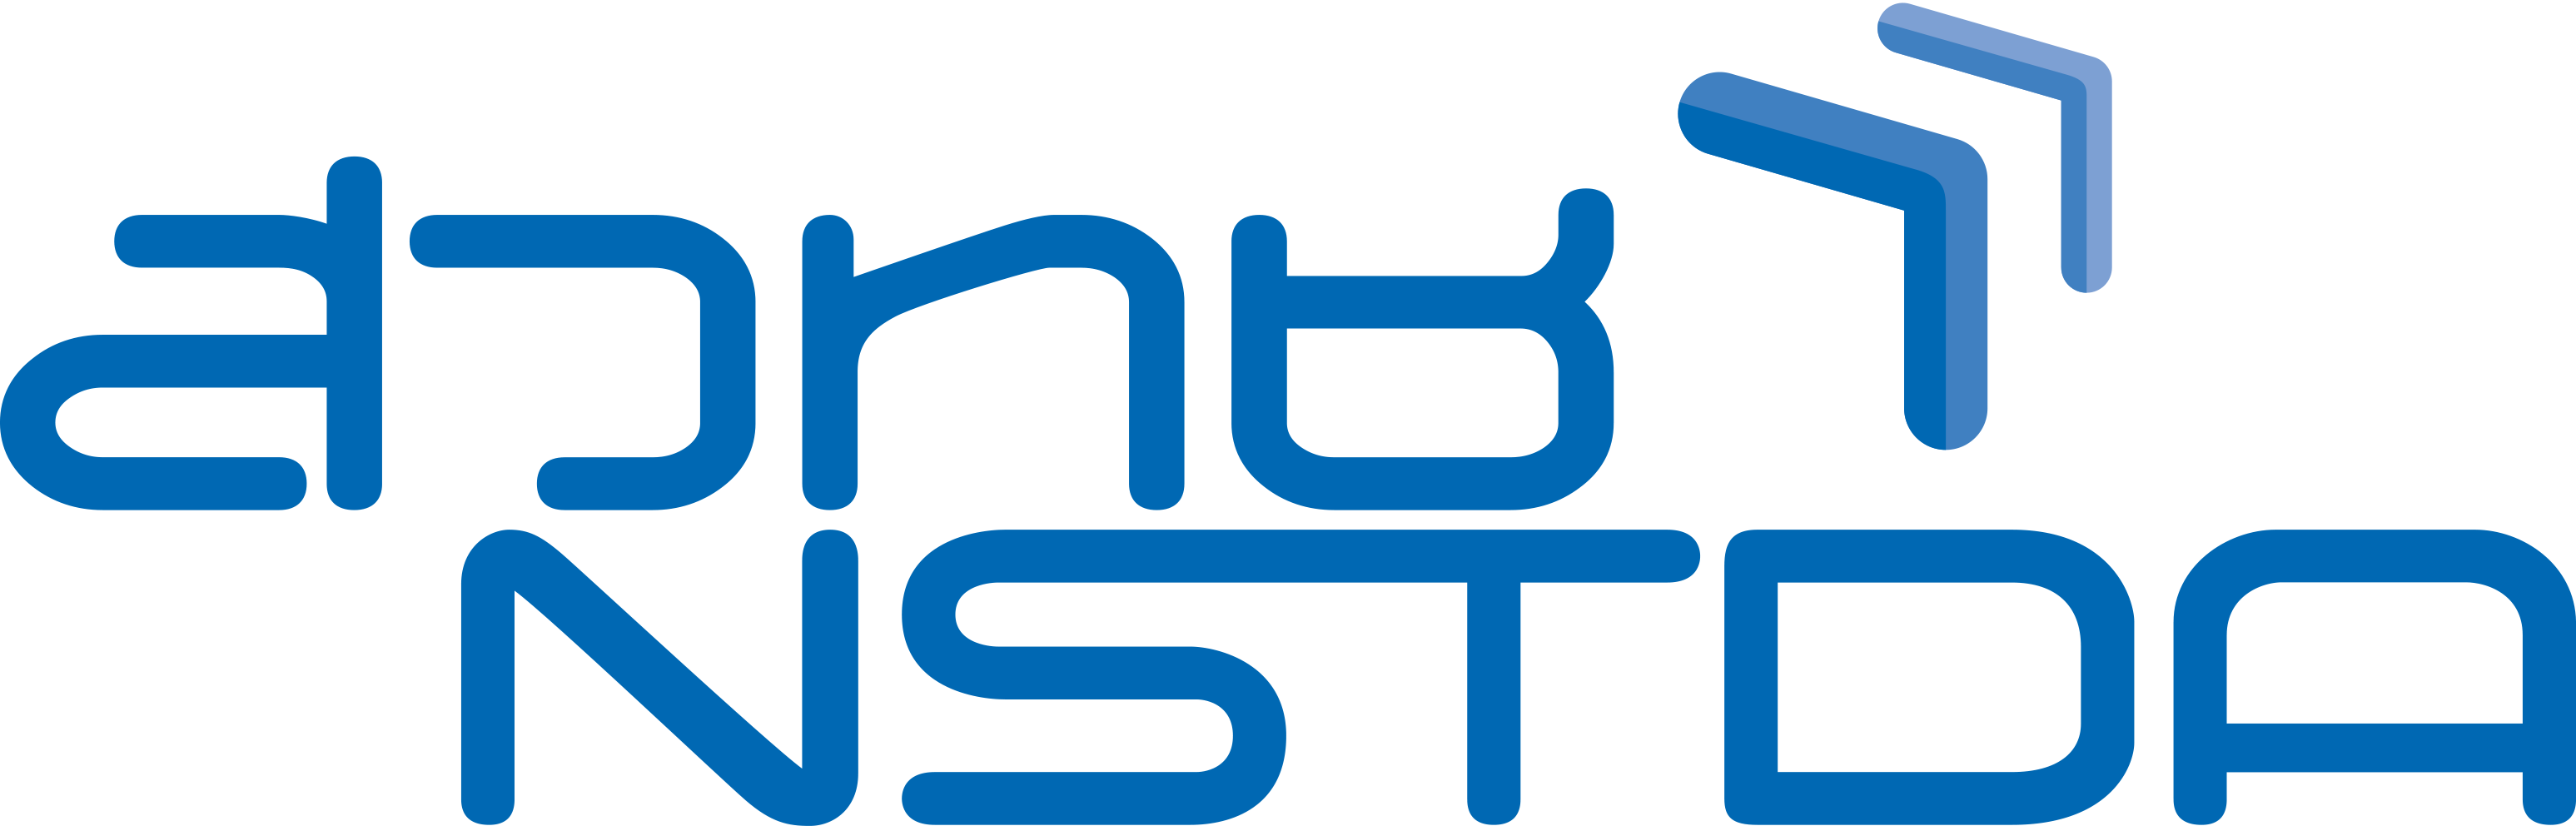 National Science and Technology Development Agency (NSTDA) logo